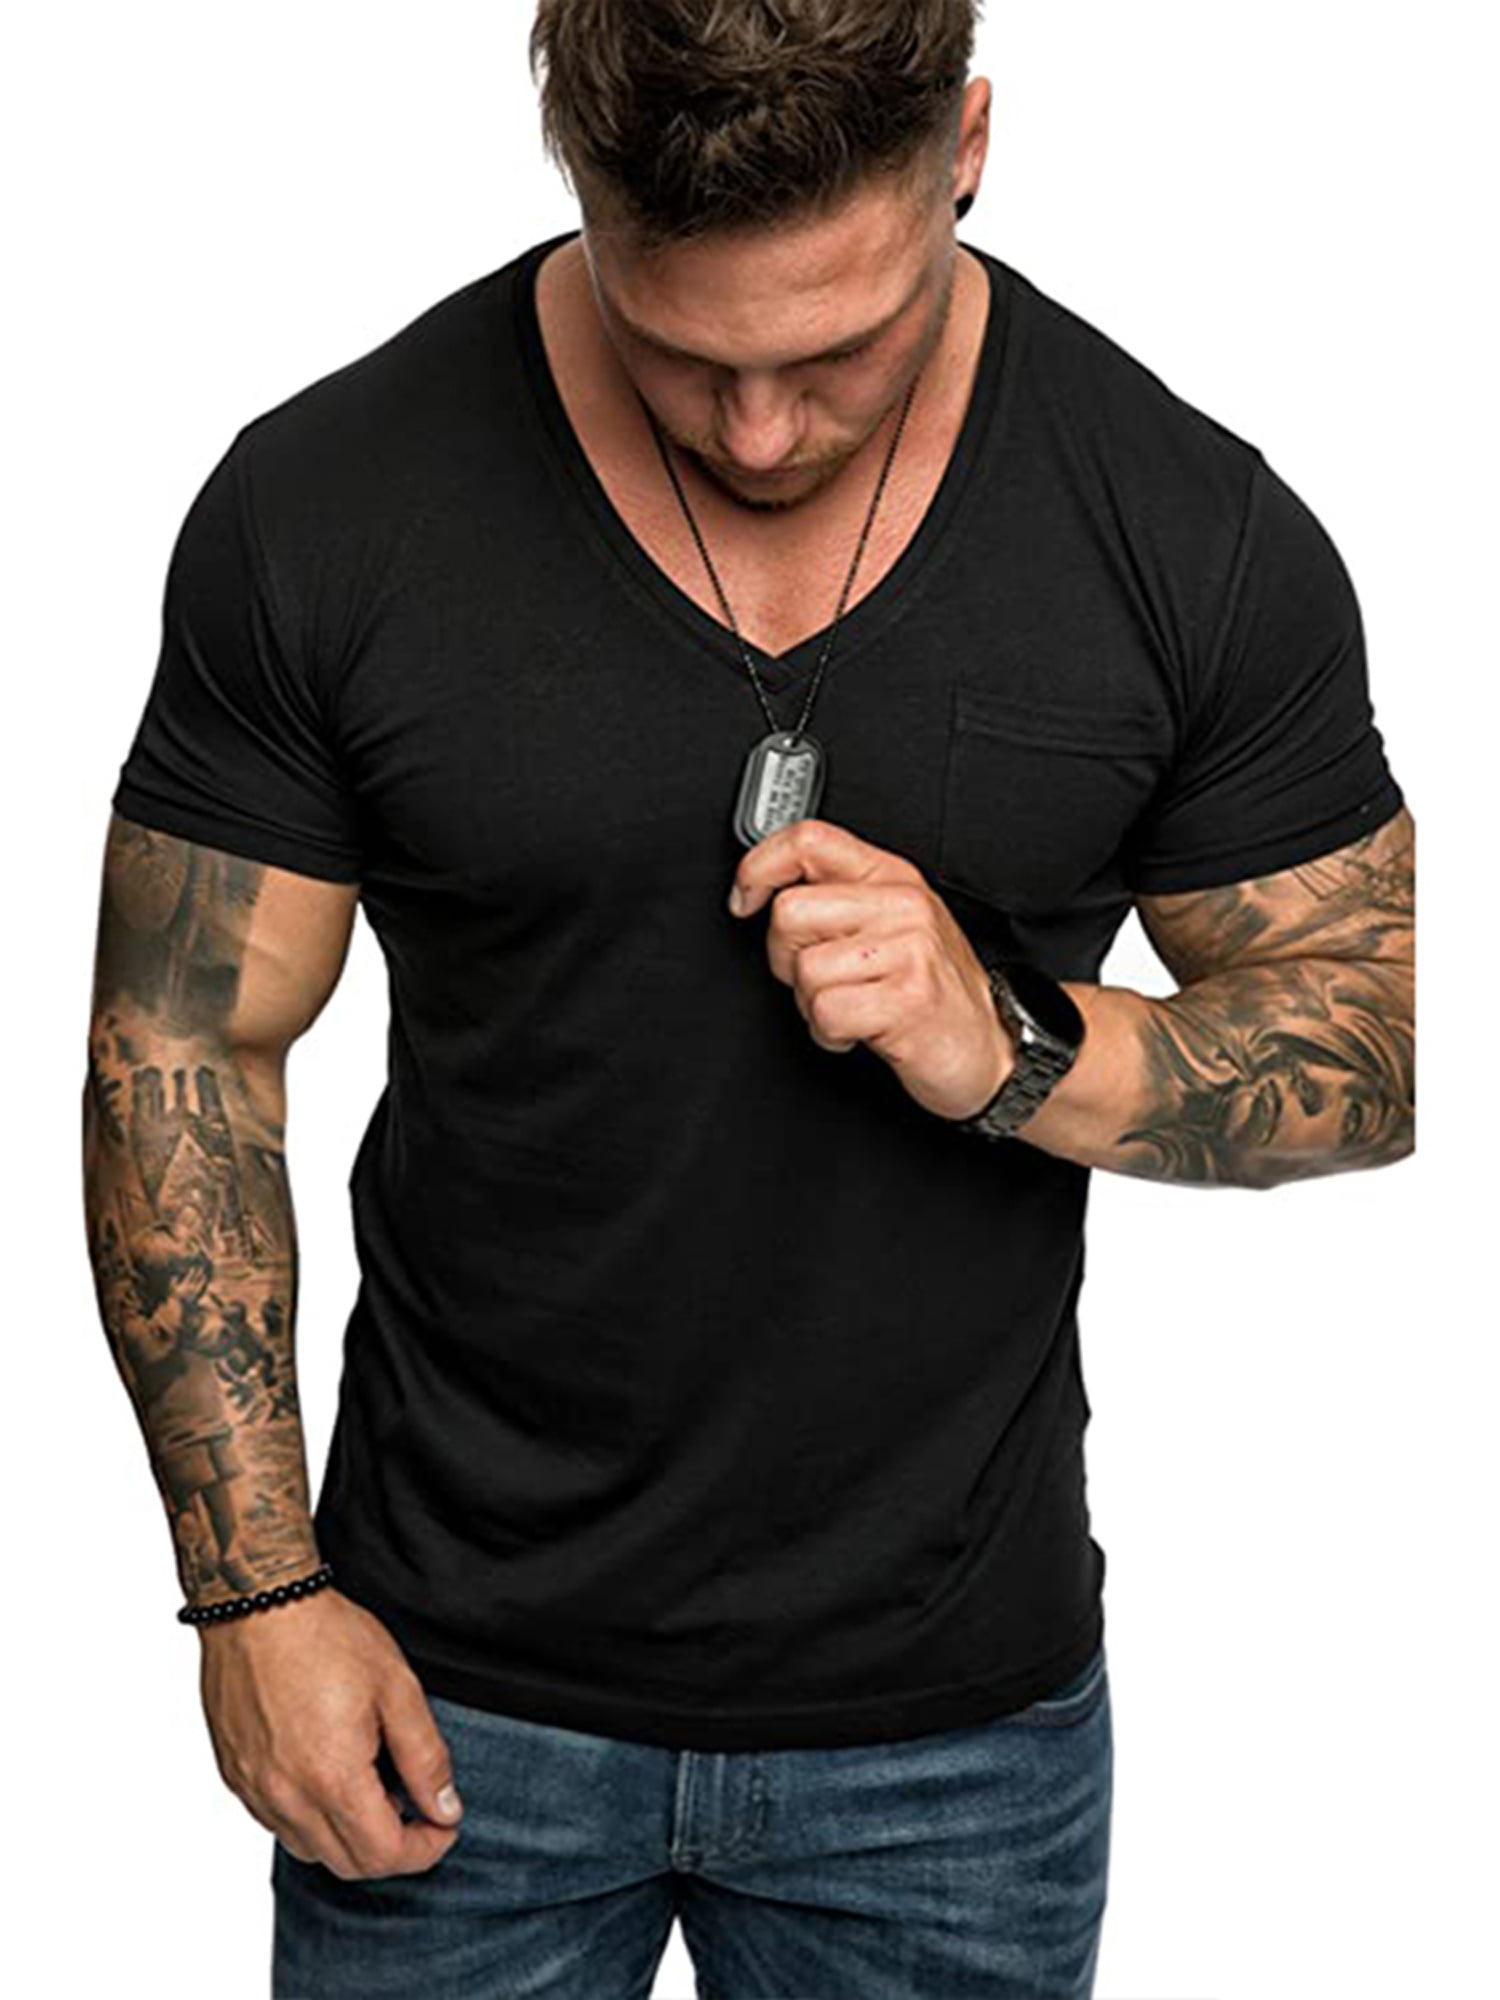 COOFANDY Men's Muscle V Neck T Shirt Gym Athletic Long Sleeves Tee Top Black/Khaki 